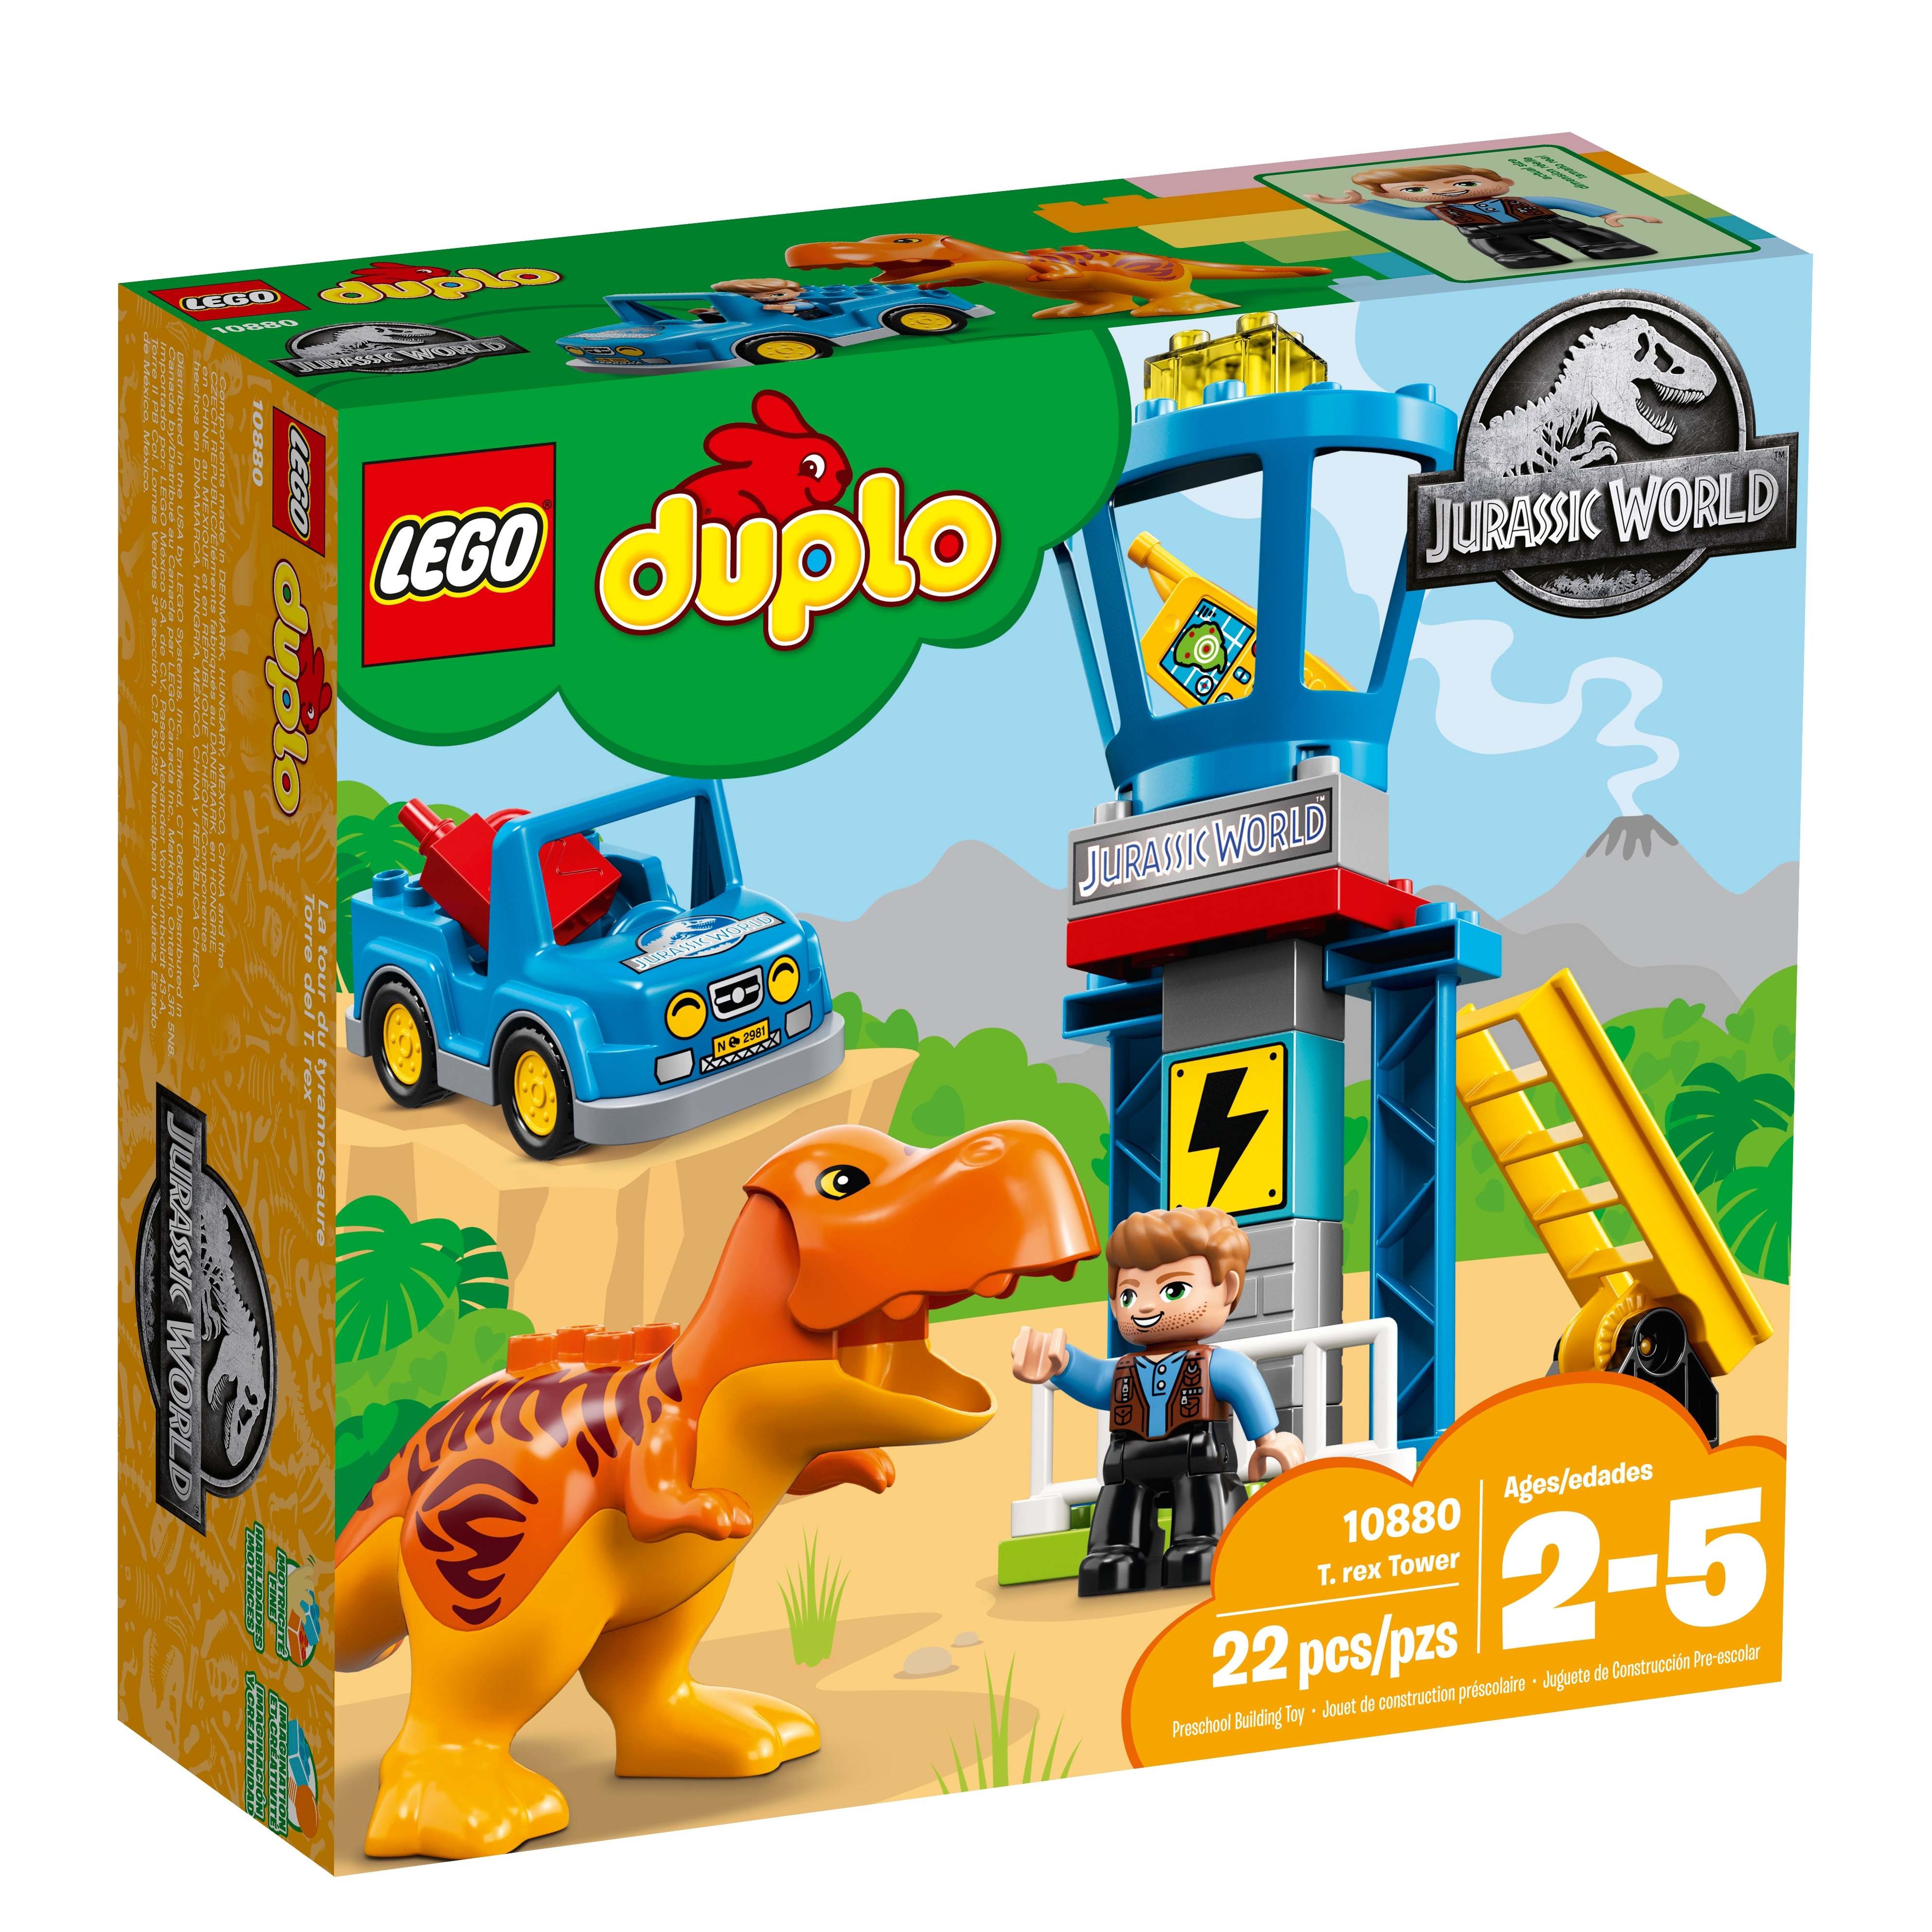 2x Dinosaur dinosaure Tail queue trompe Neck or doré/pearl gold 40378 NEW Lego 